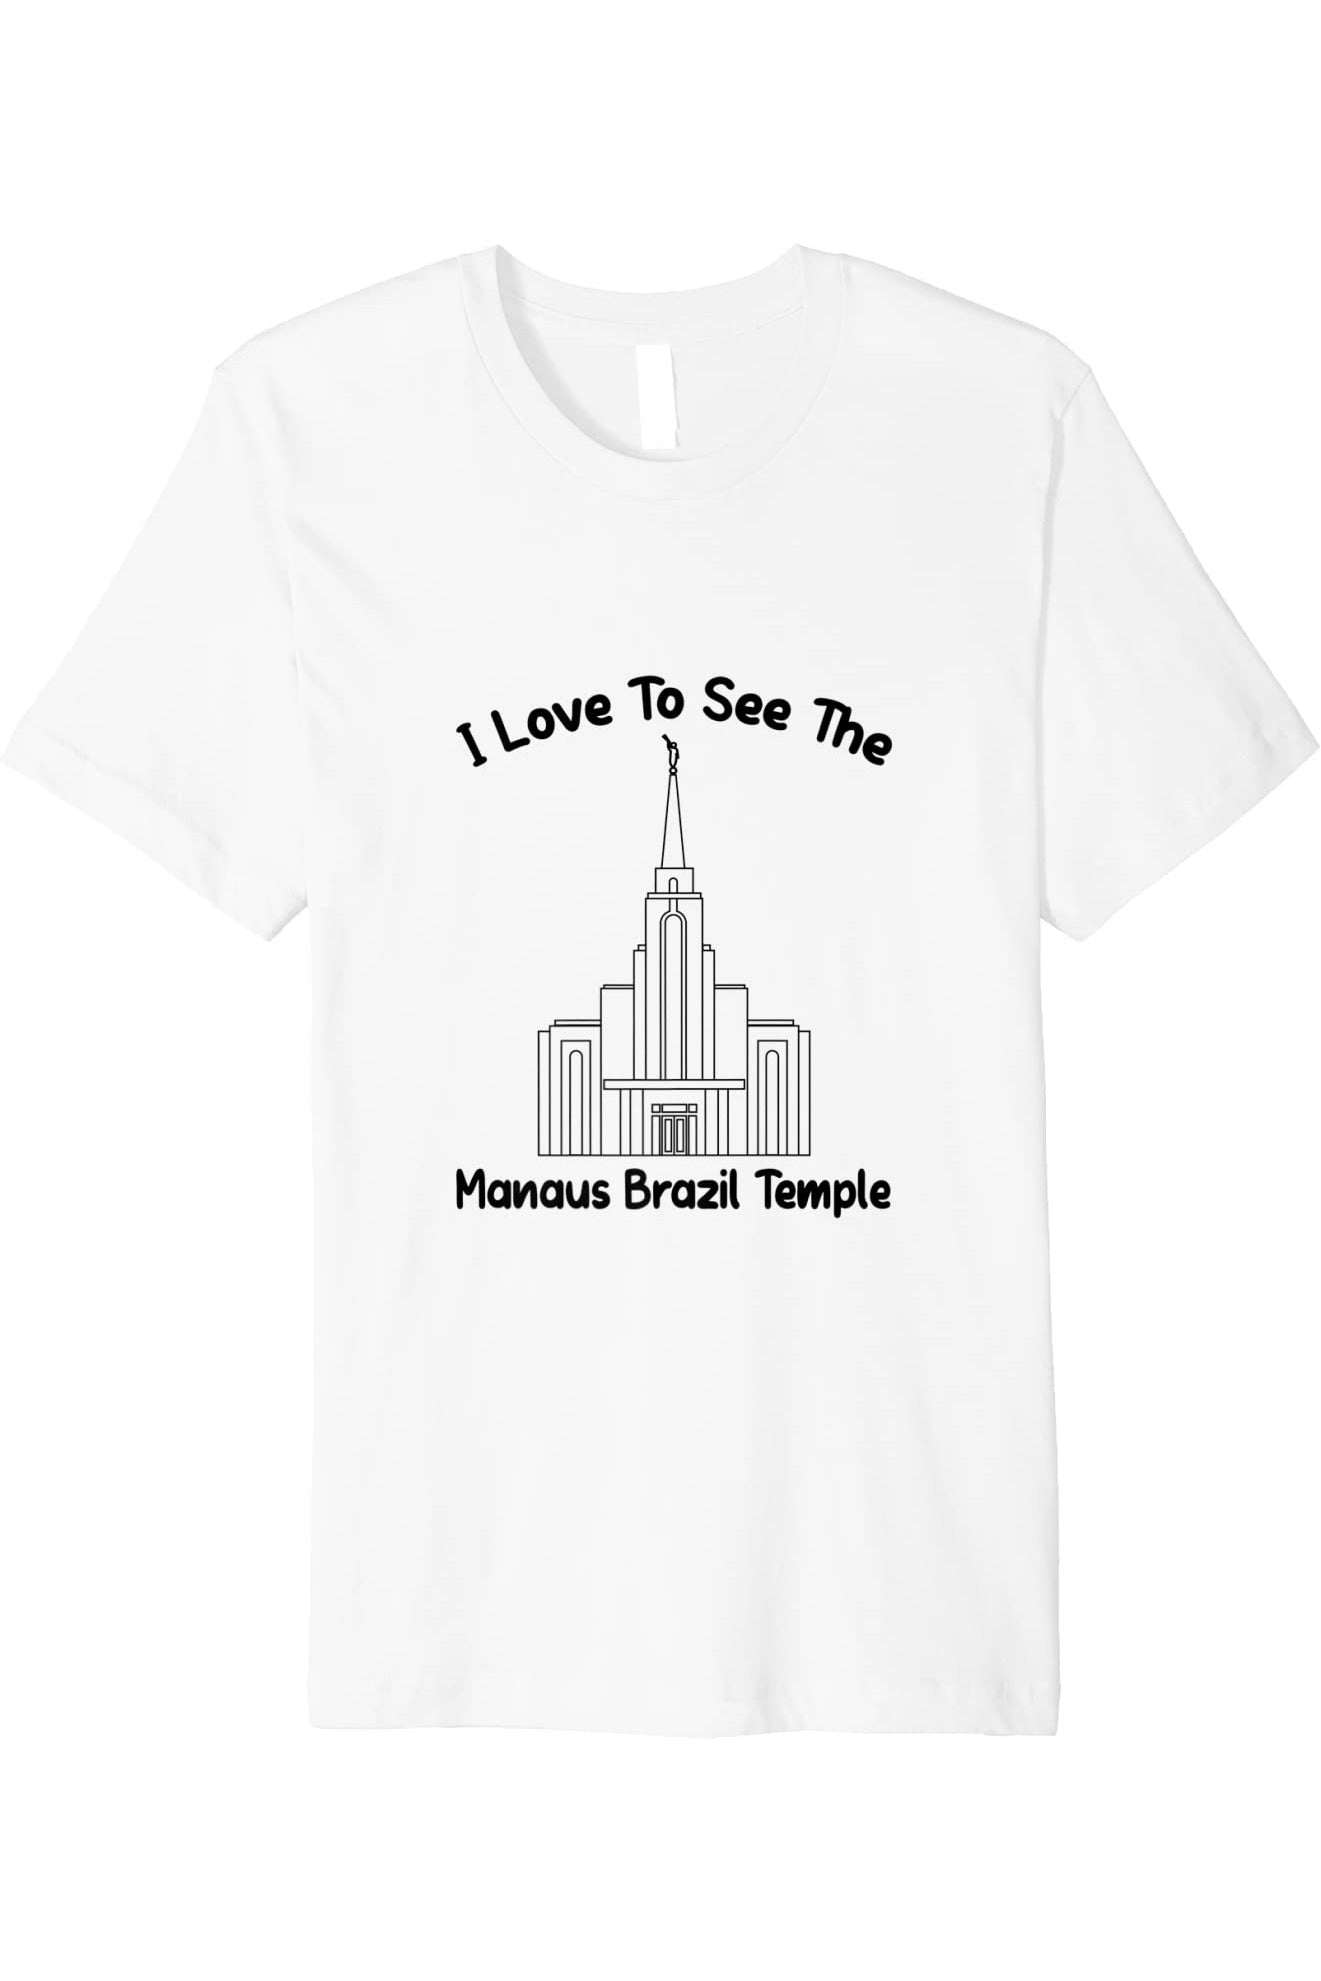 Manaus Brazil Temple T-Shirt - Premium - Primary Style (English) US